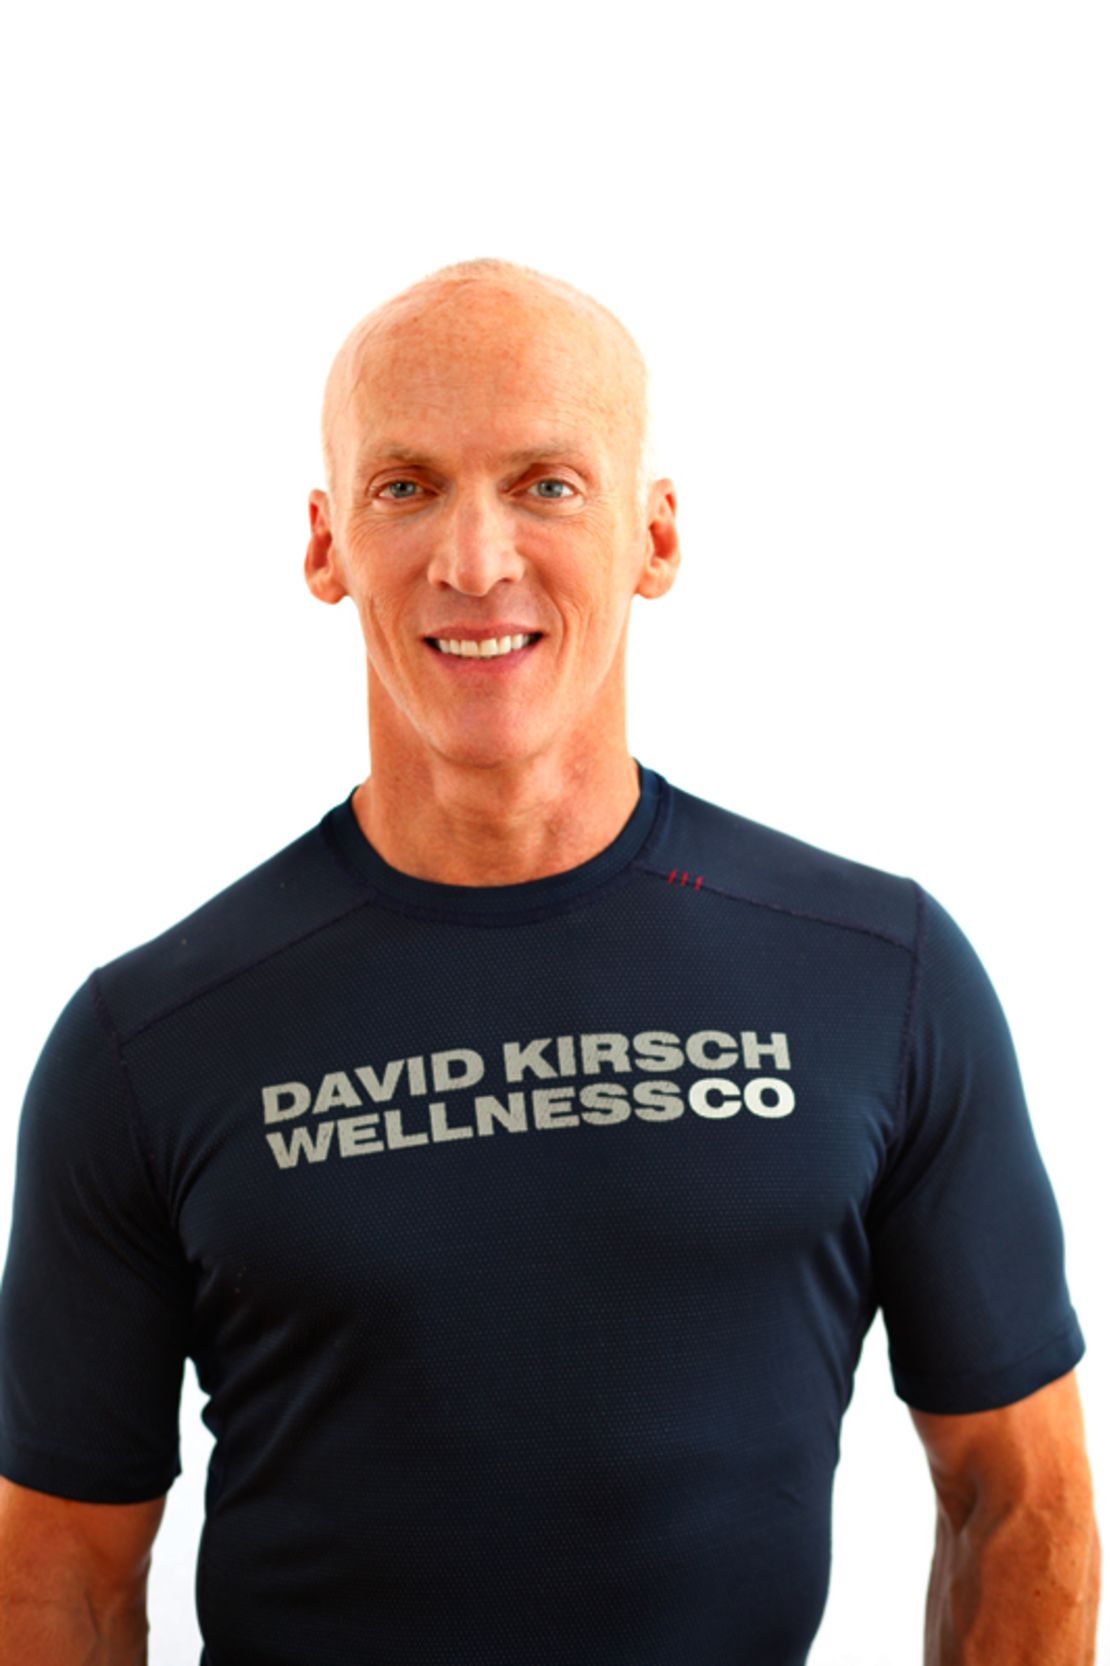 David Kirsch is a wellness expert and celebrity fitness trainer.